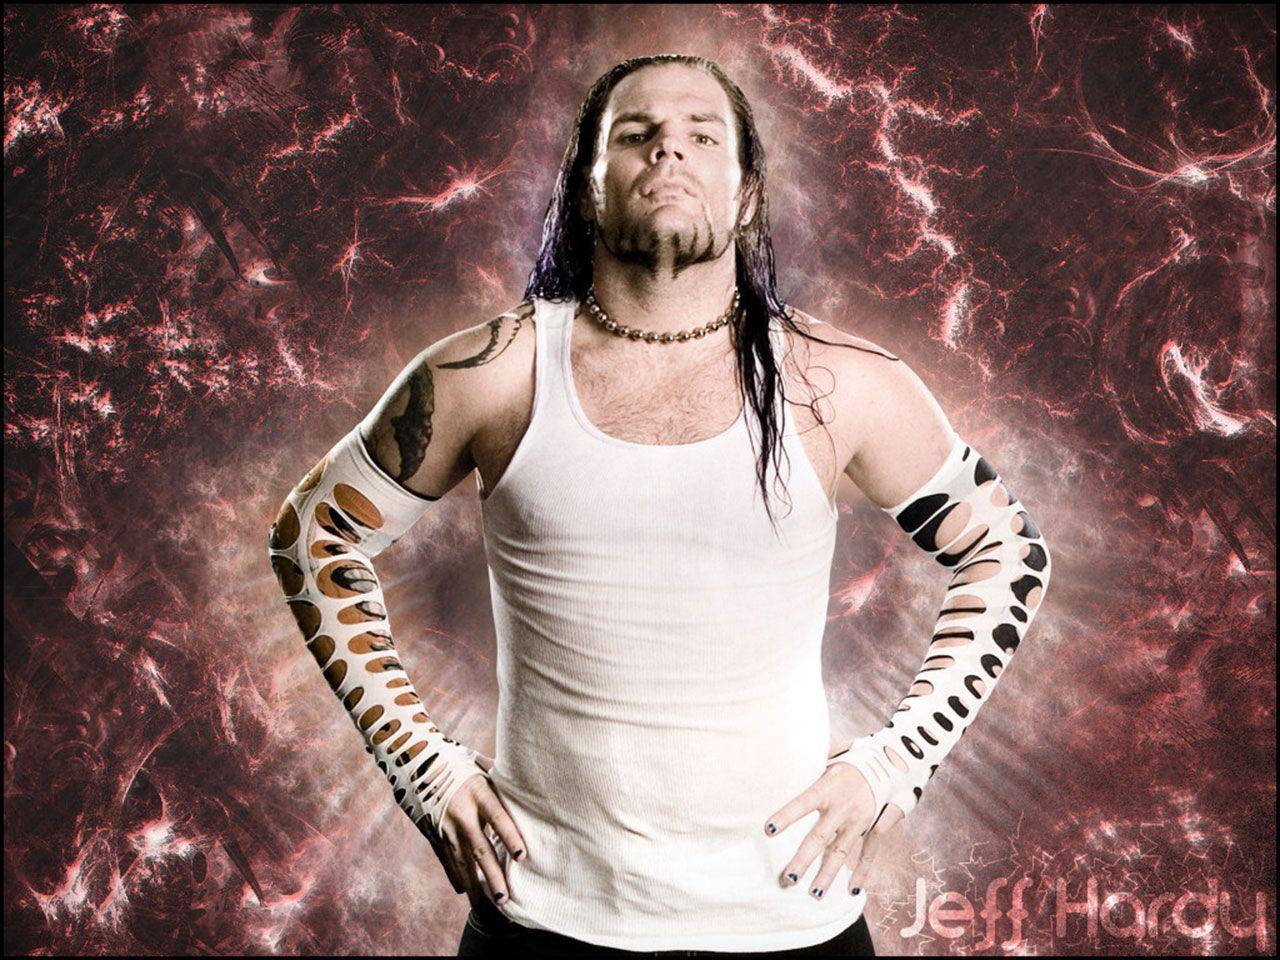 Jeff Hardy Wallpaper. Jeff Hardy Photo. Jeff Hardy Image. Jeff